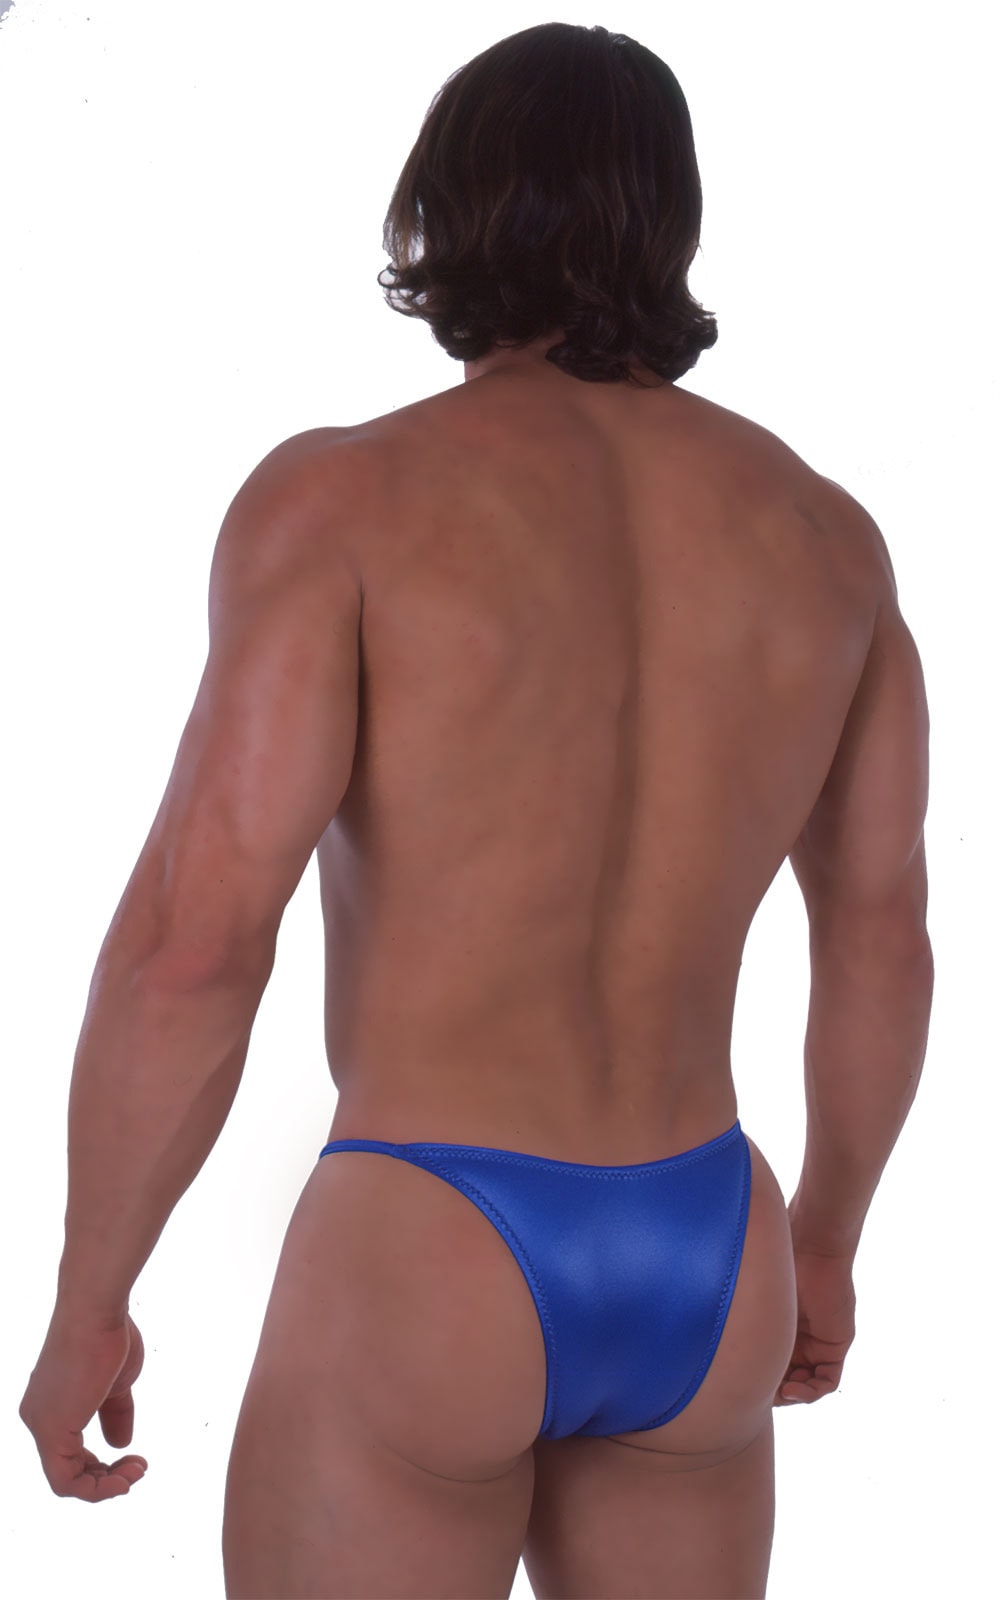 Skinny Side Half Back Swim Suit in Wet Look Royal Blue, Rear View